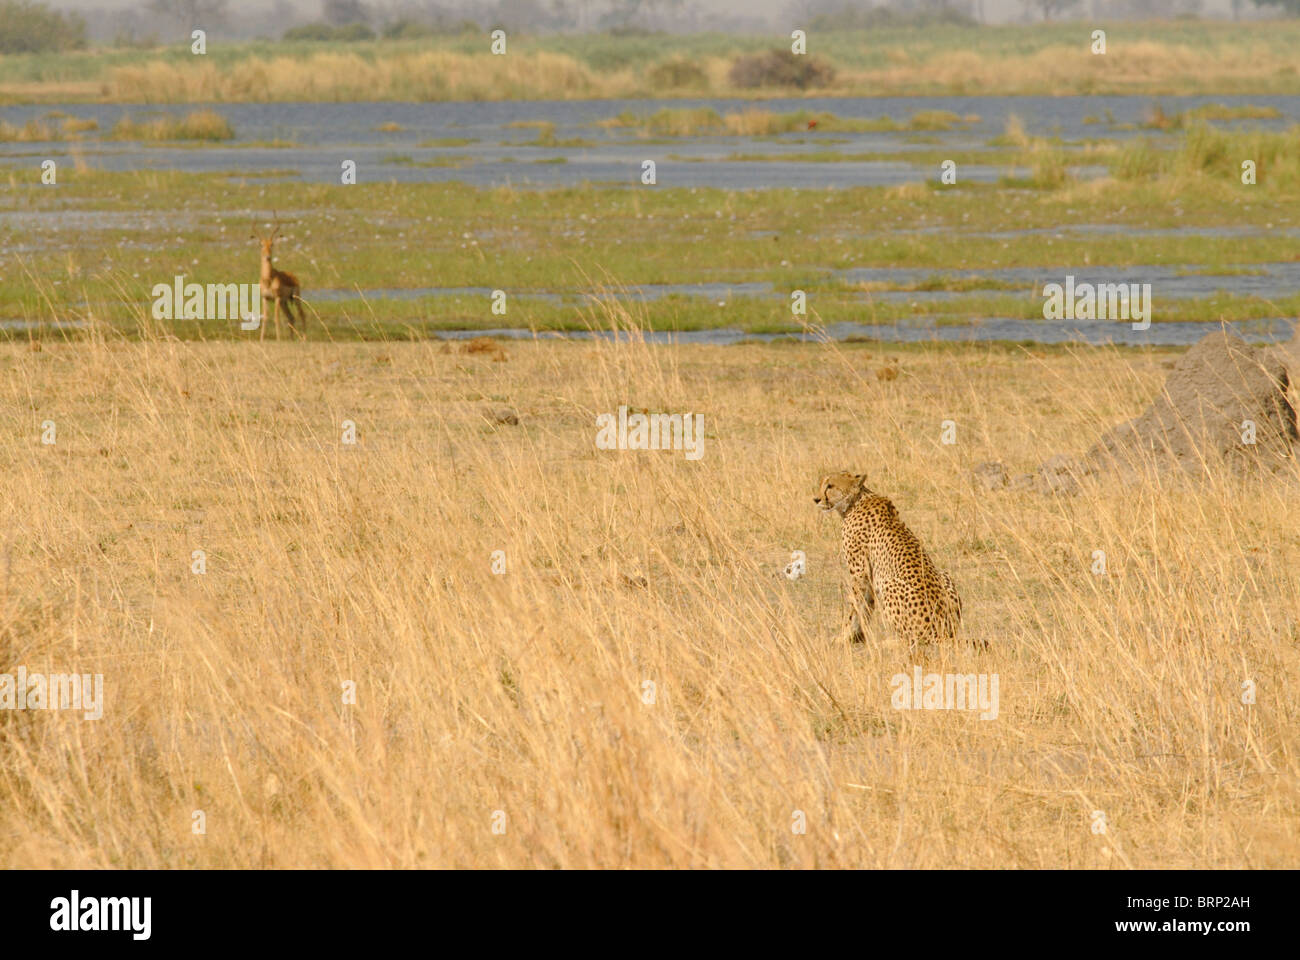 Cheetah stalking across floodplain Stock Photo